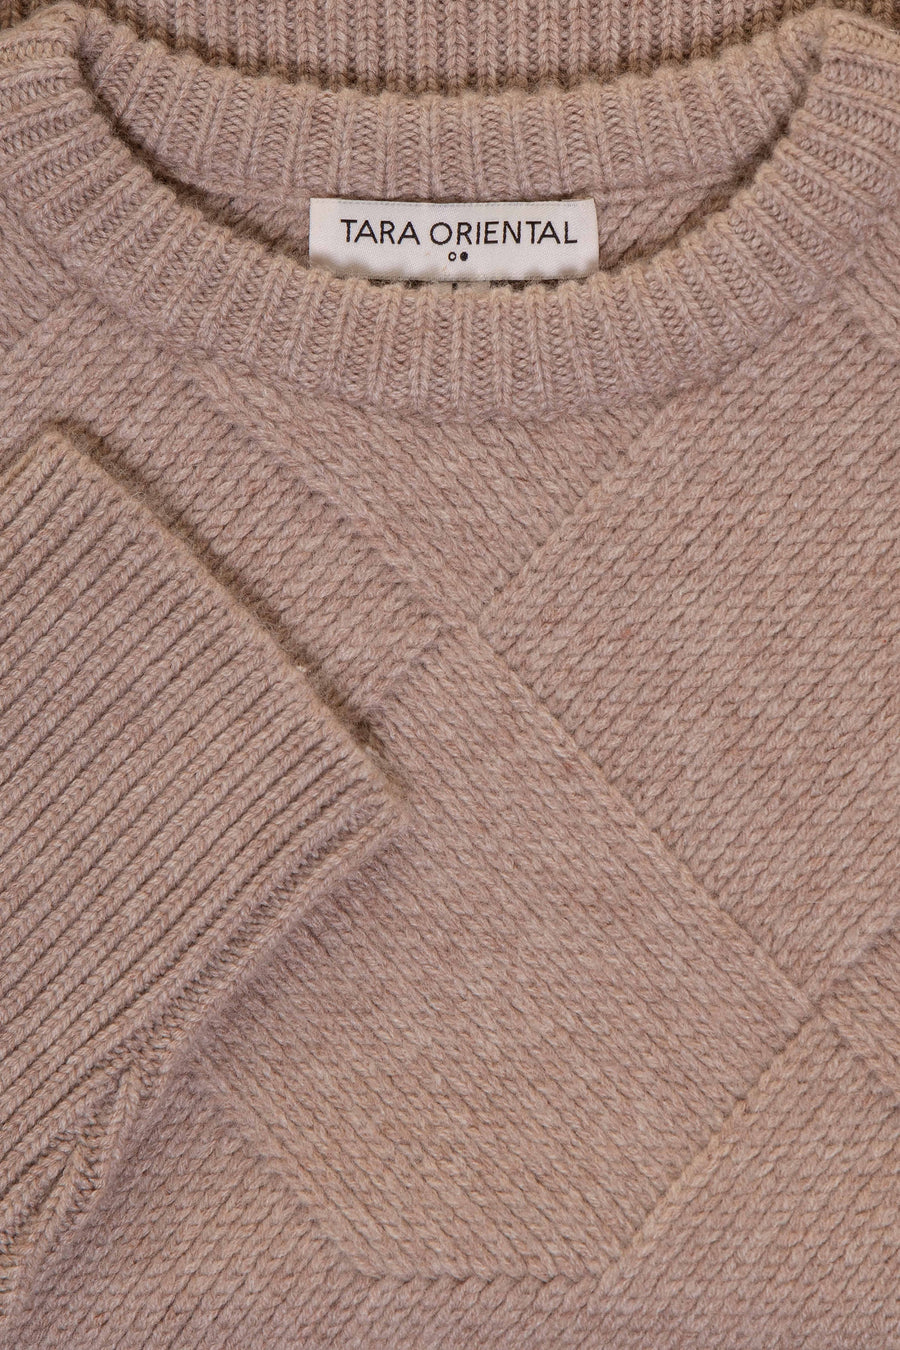 Men's Wool Cashmere Lattice Top